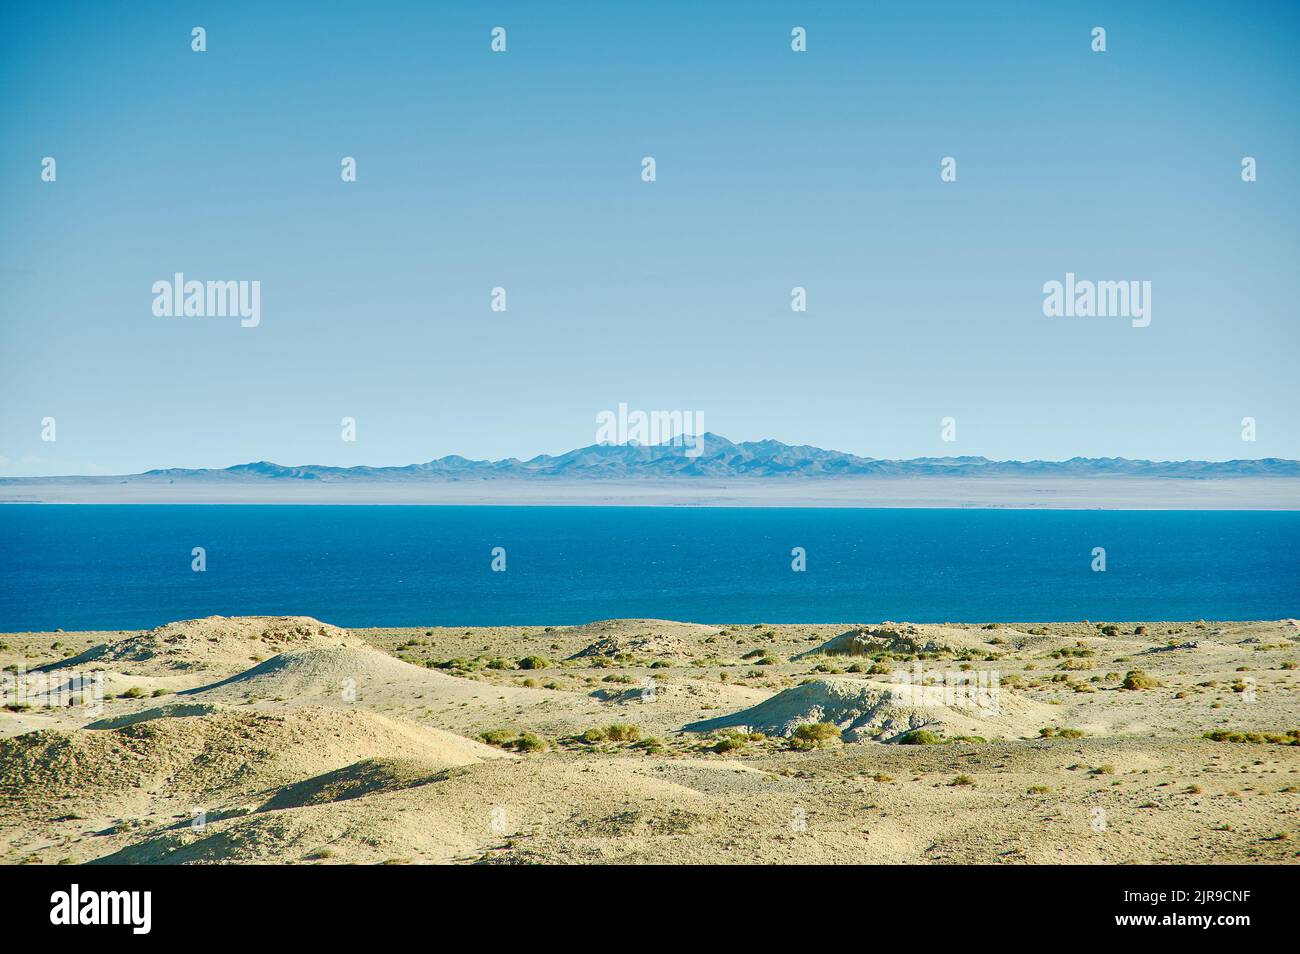 Khyargas Nuur salt lake in Khyargas district, Uvs Province, Western Mongolia Stock Photo